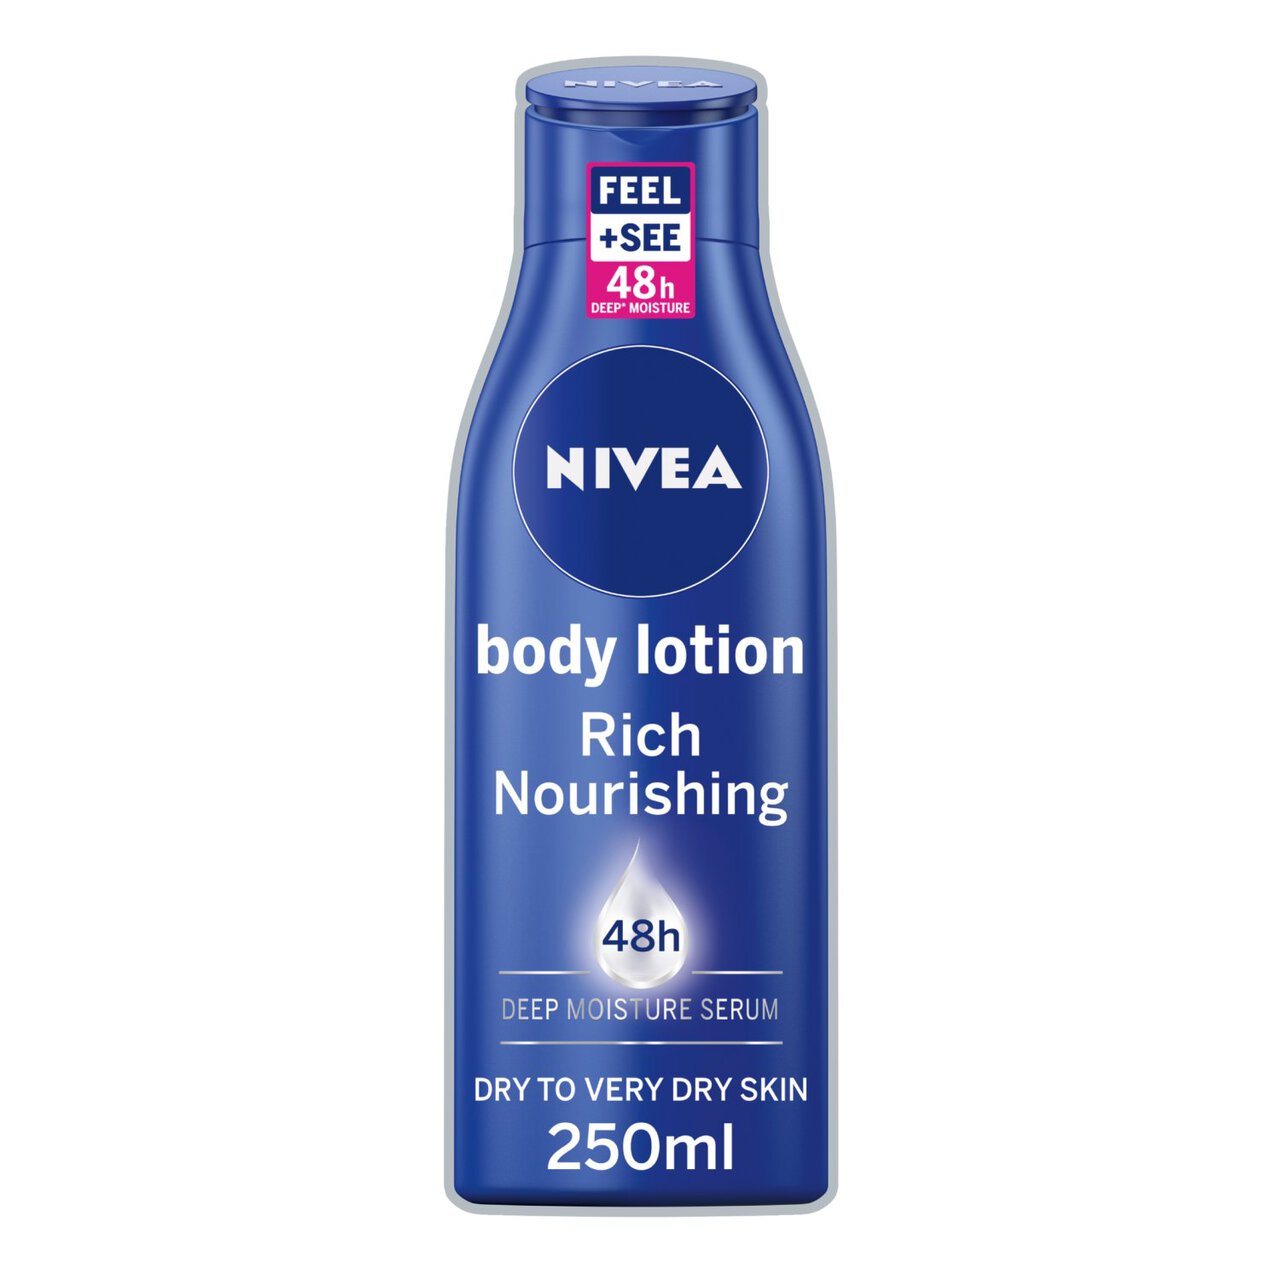 NIVEA Body Lotion for Very Dry Skin, Rich Nourishing 250ml